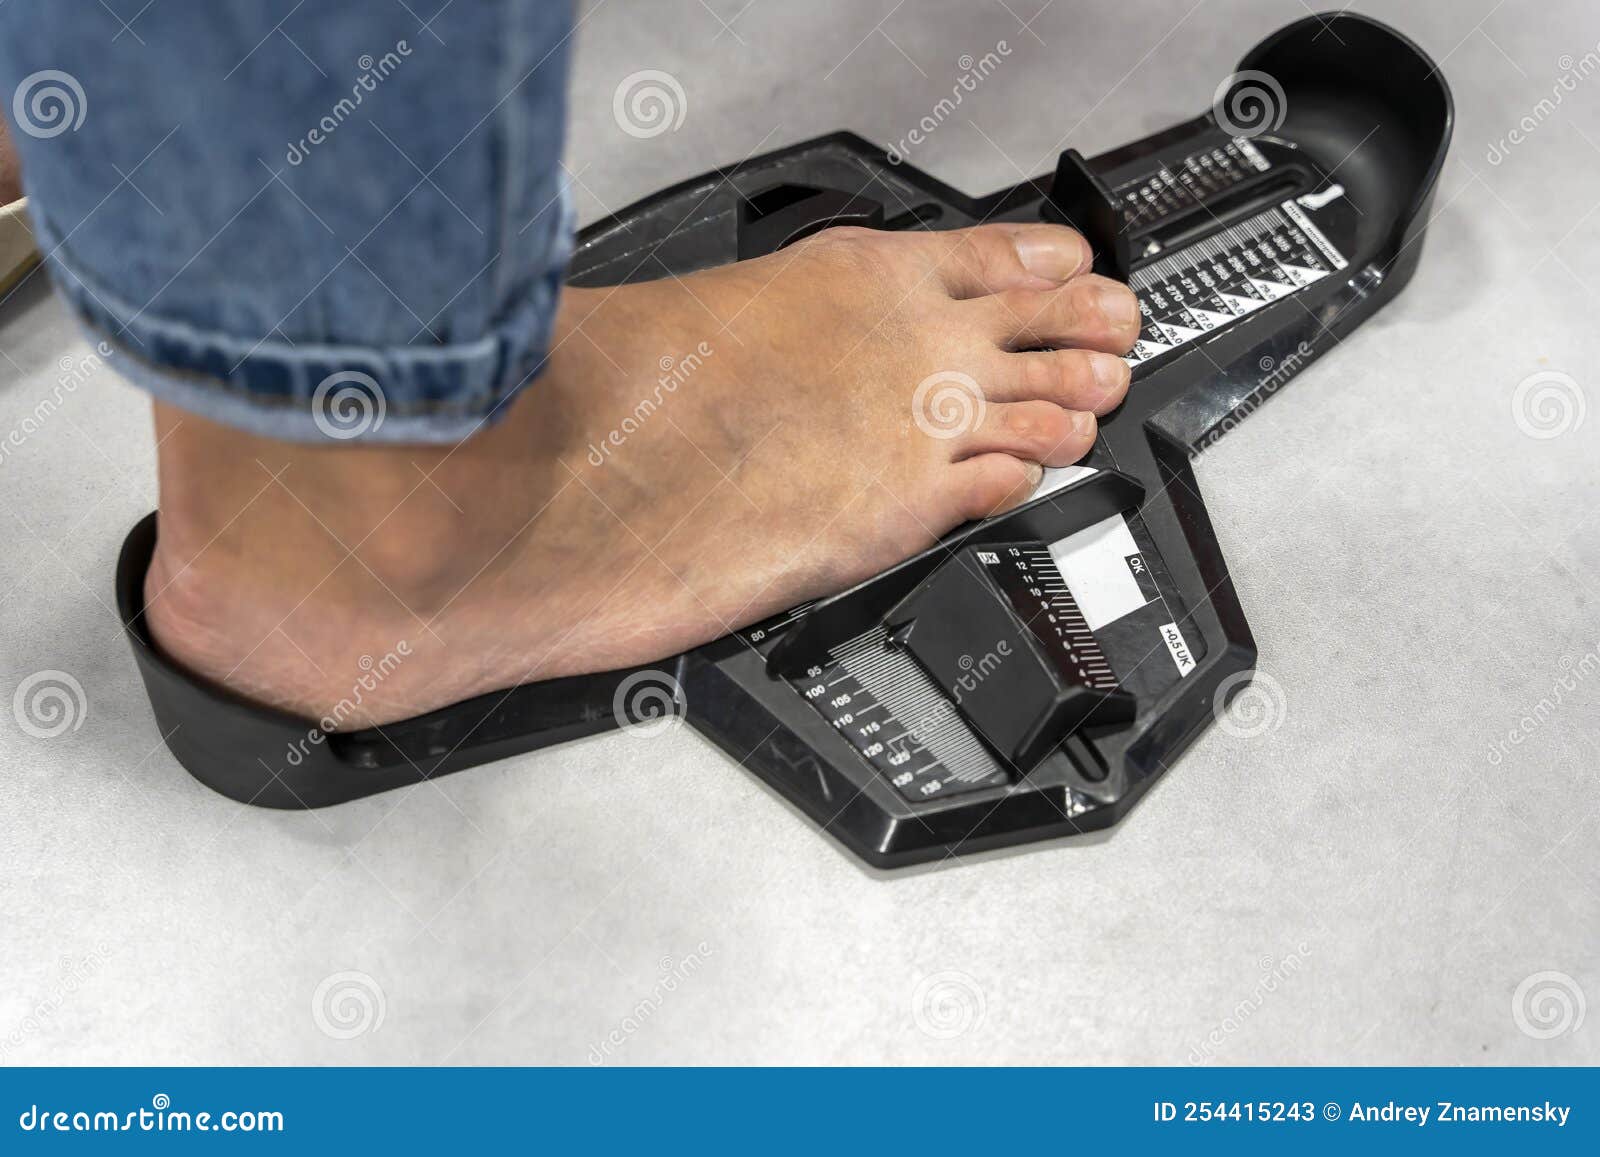 woman measuring shoe size storage device determining fullness length foot shoe size device foot measuring 254415243